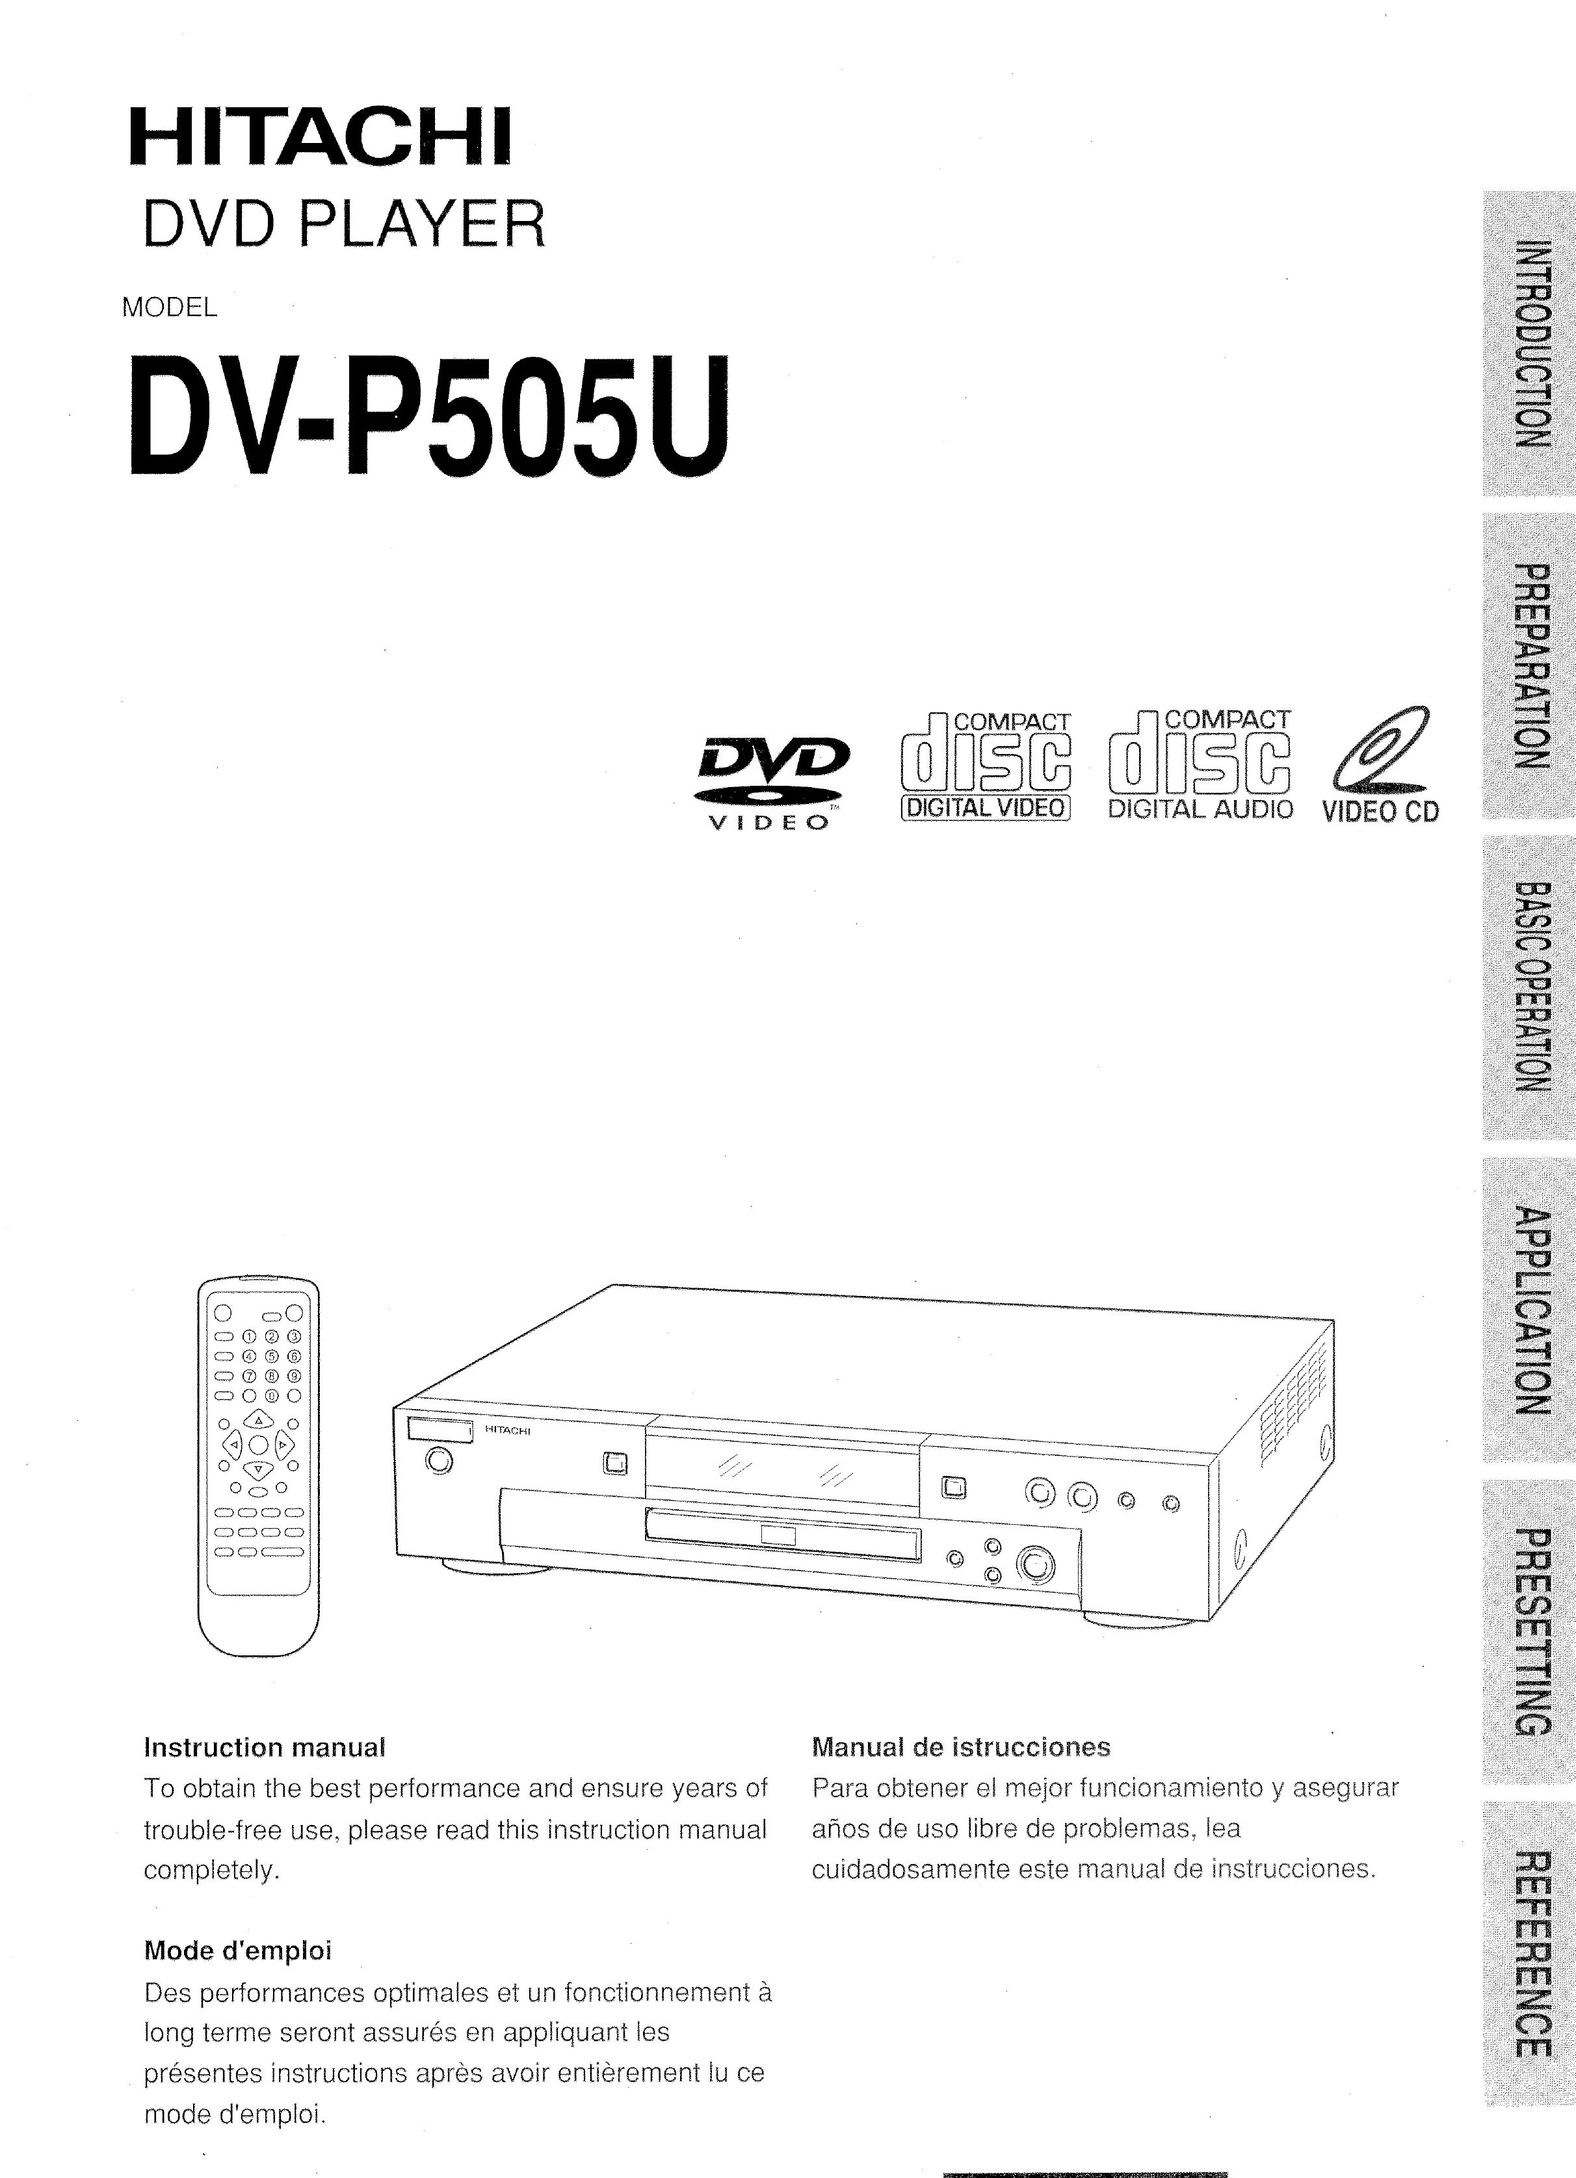 Hitachi DVP505U DVD Player User Manual